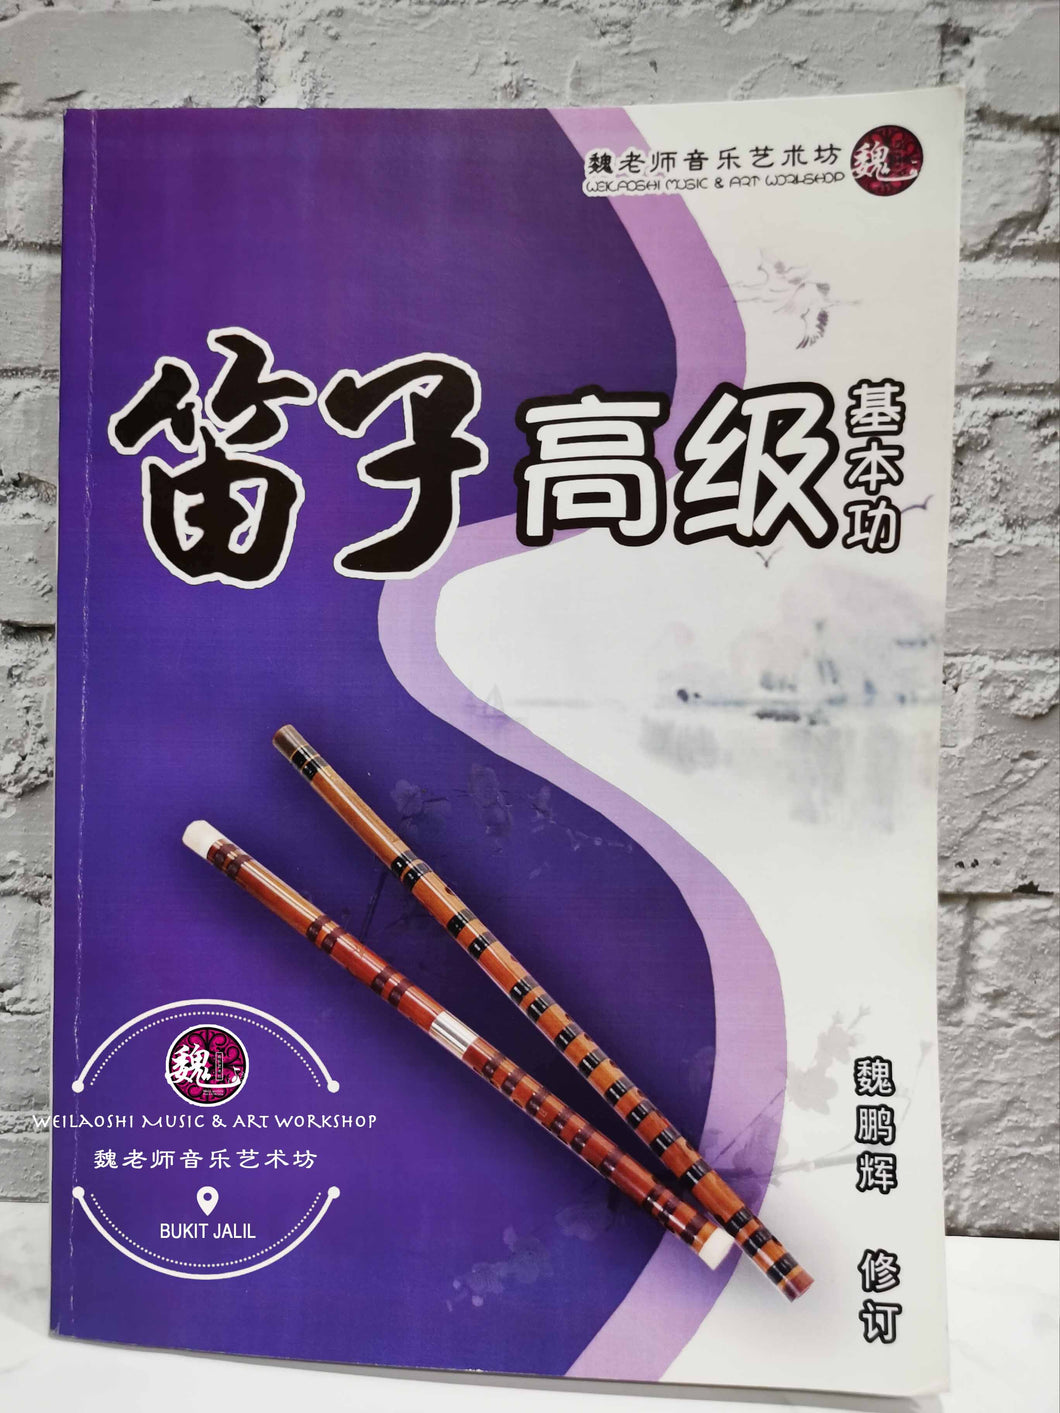 Bamboo Flute Practice Method Advance Book ™ 笛子高级基本功